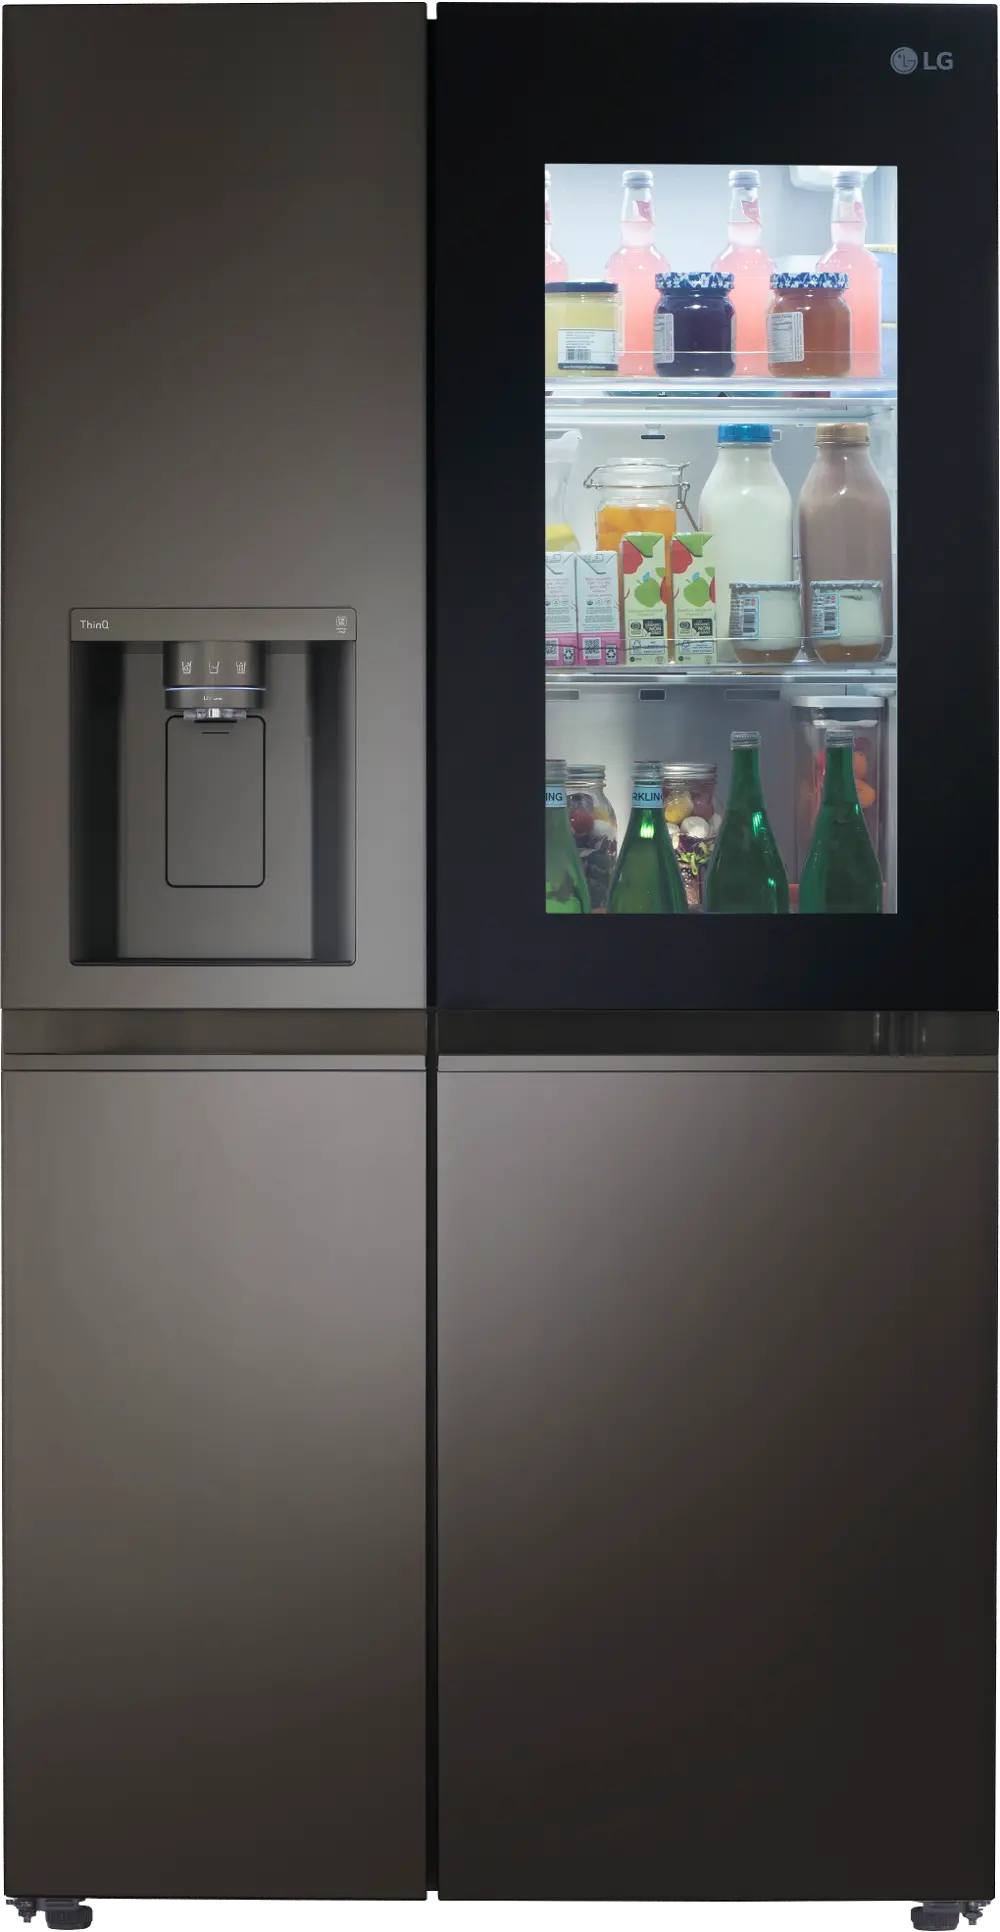 LRSOC2306D LG 23 cu ft Side by Side Refrigerator - Counter Depth, Black Stainless Steel-1